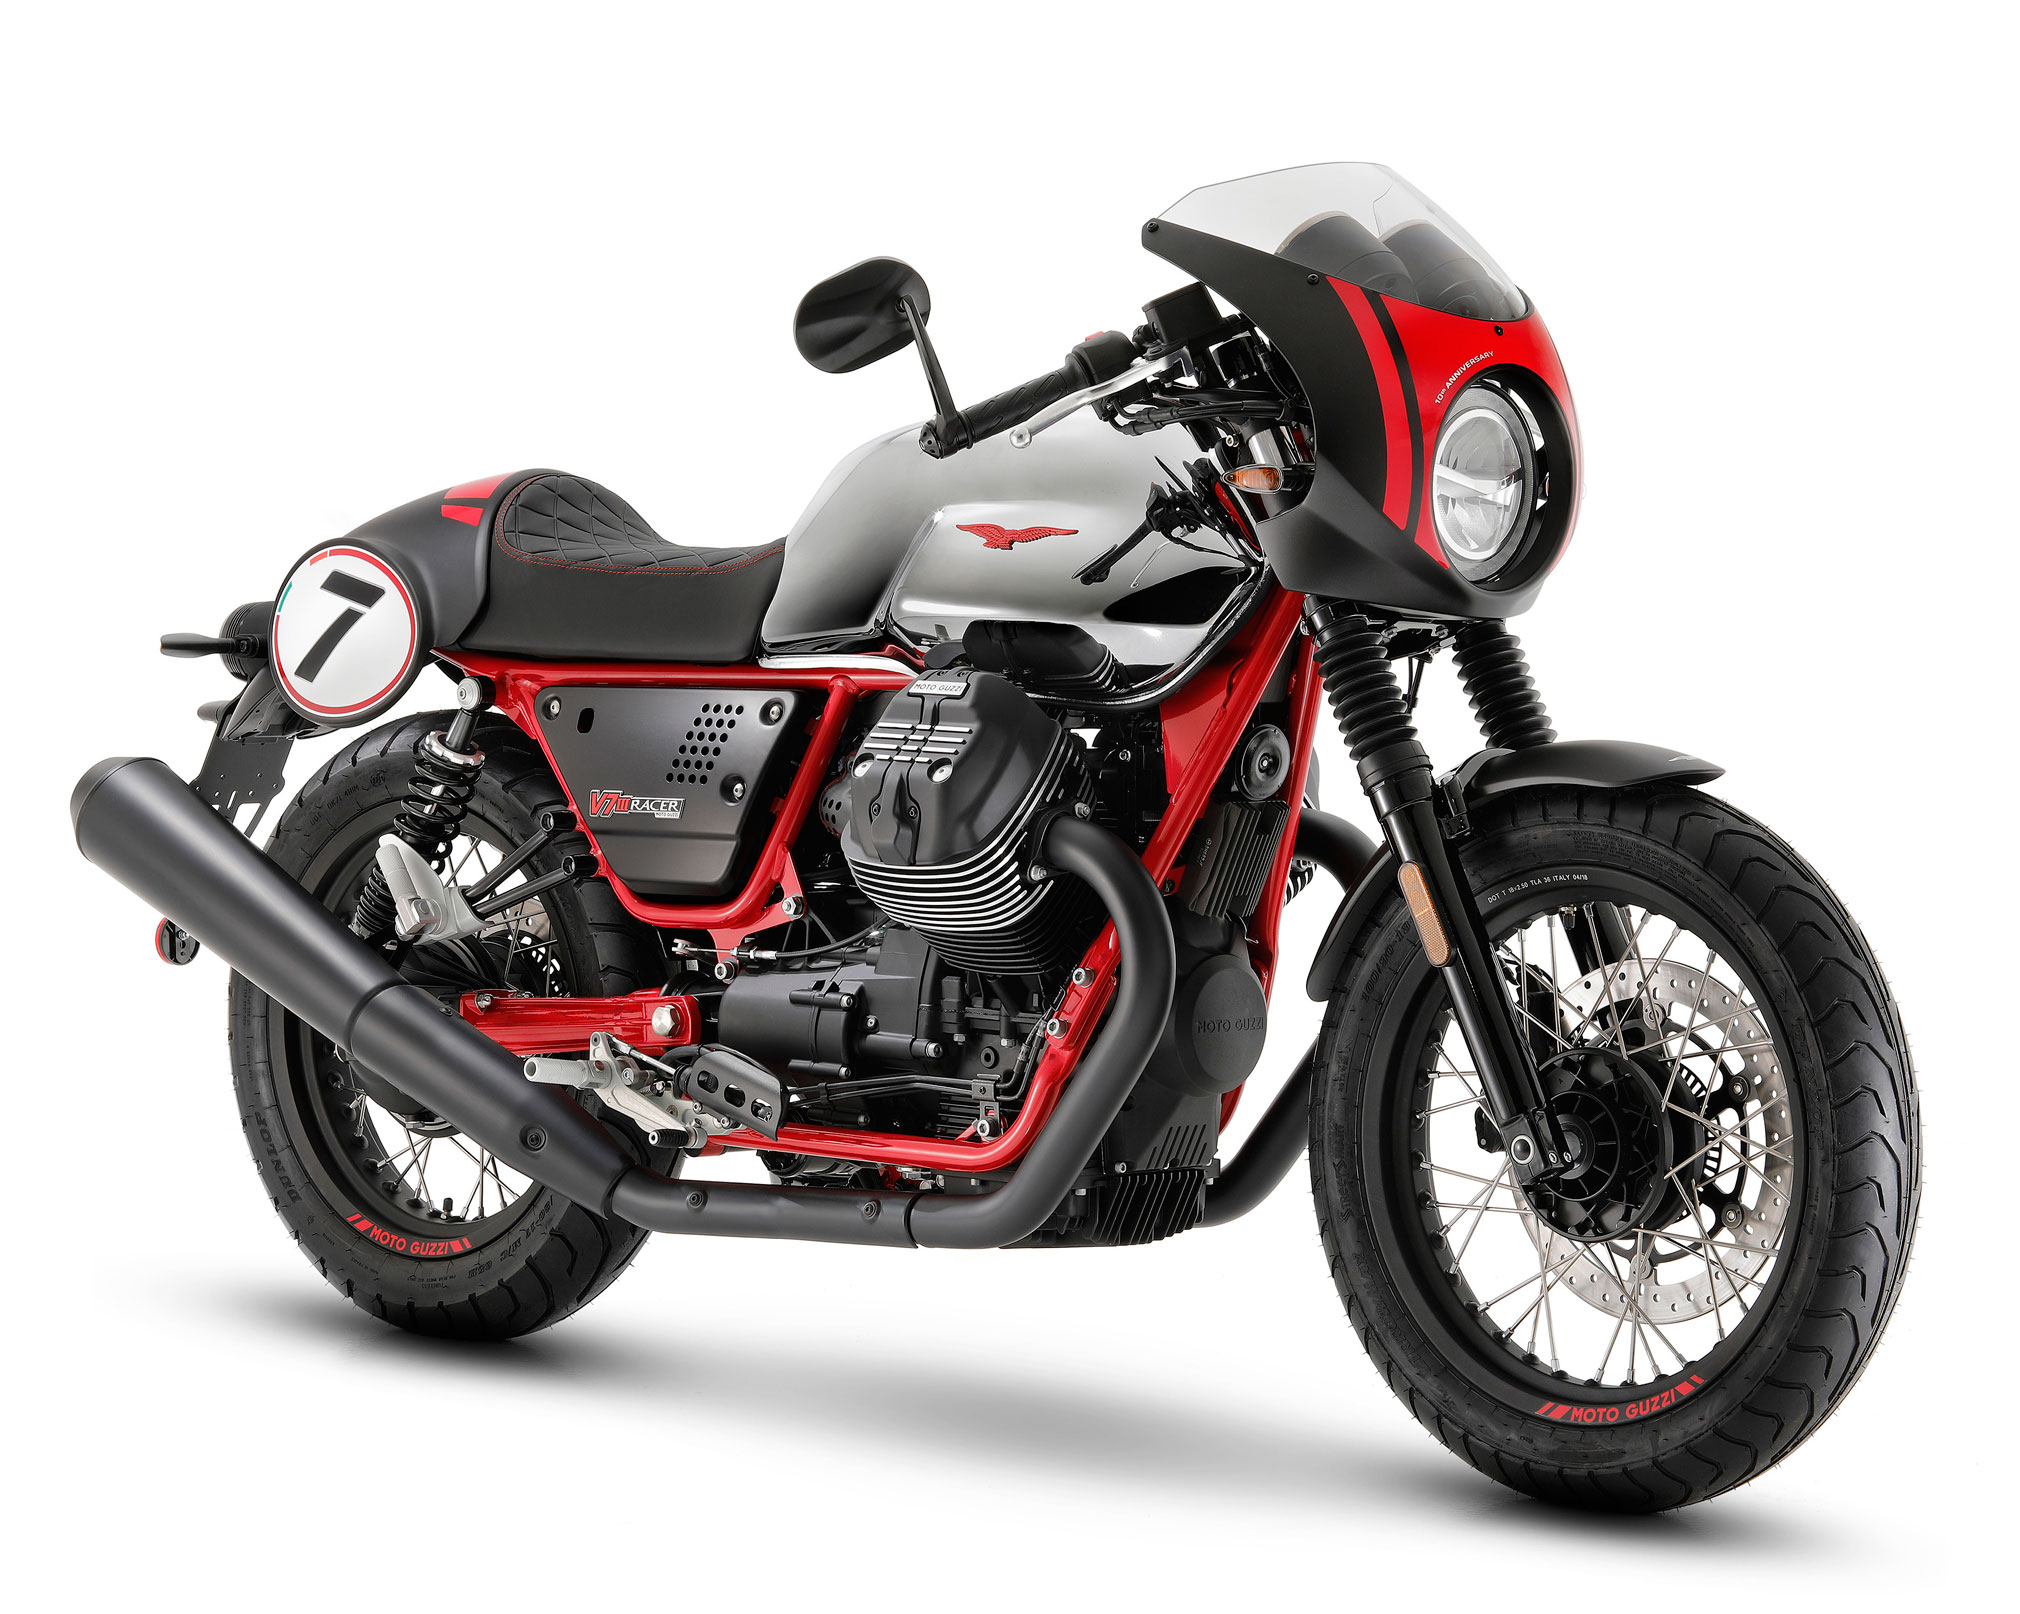 2020 Moto Guzzi V7 III Rough Guide • Total Motorcycle